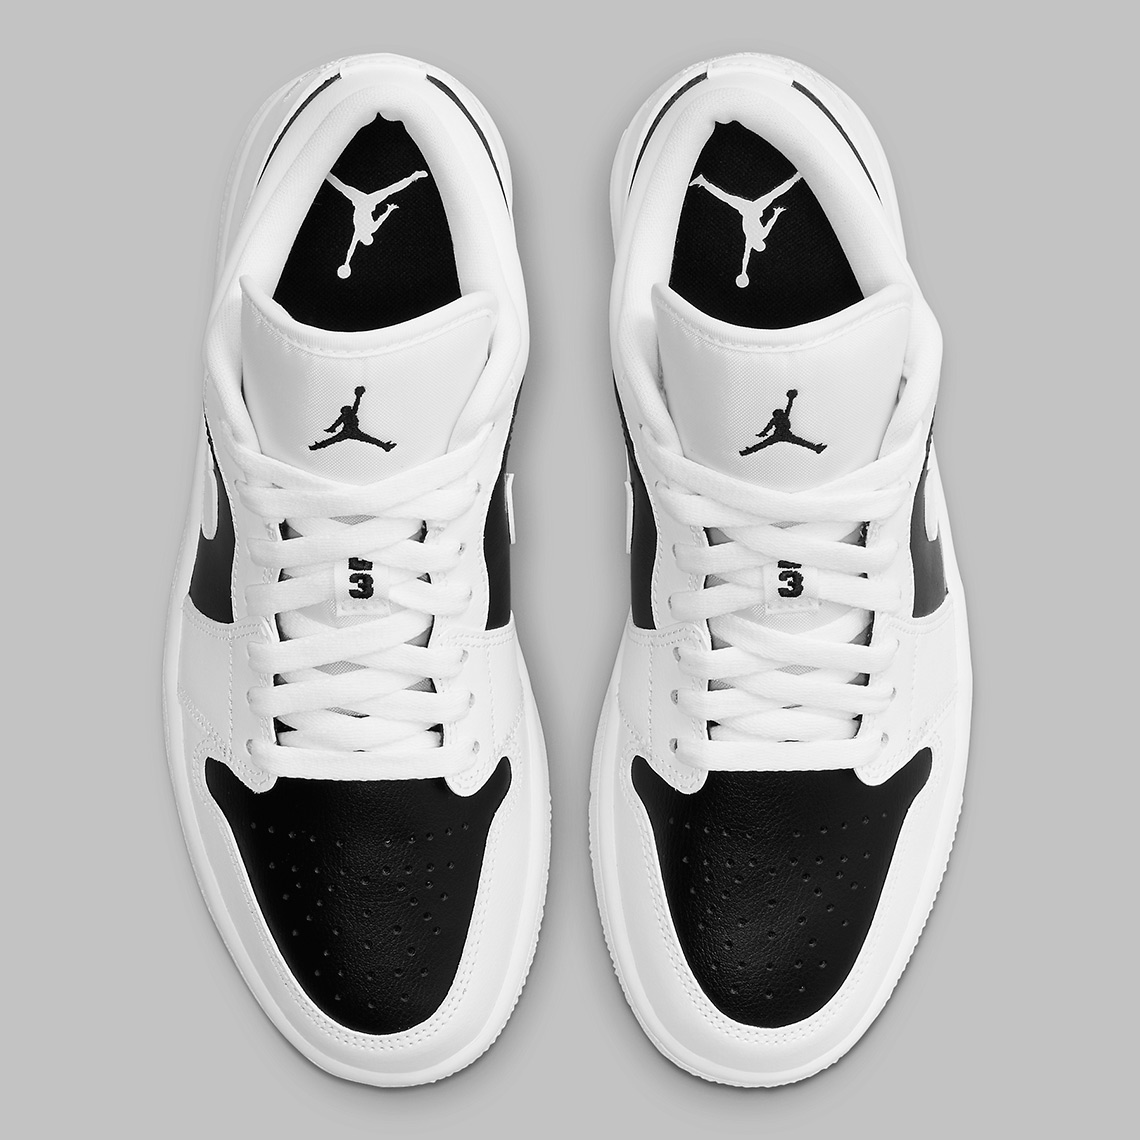 Air Jordan 2017 Retro Releases | Sole Collector